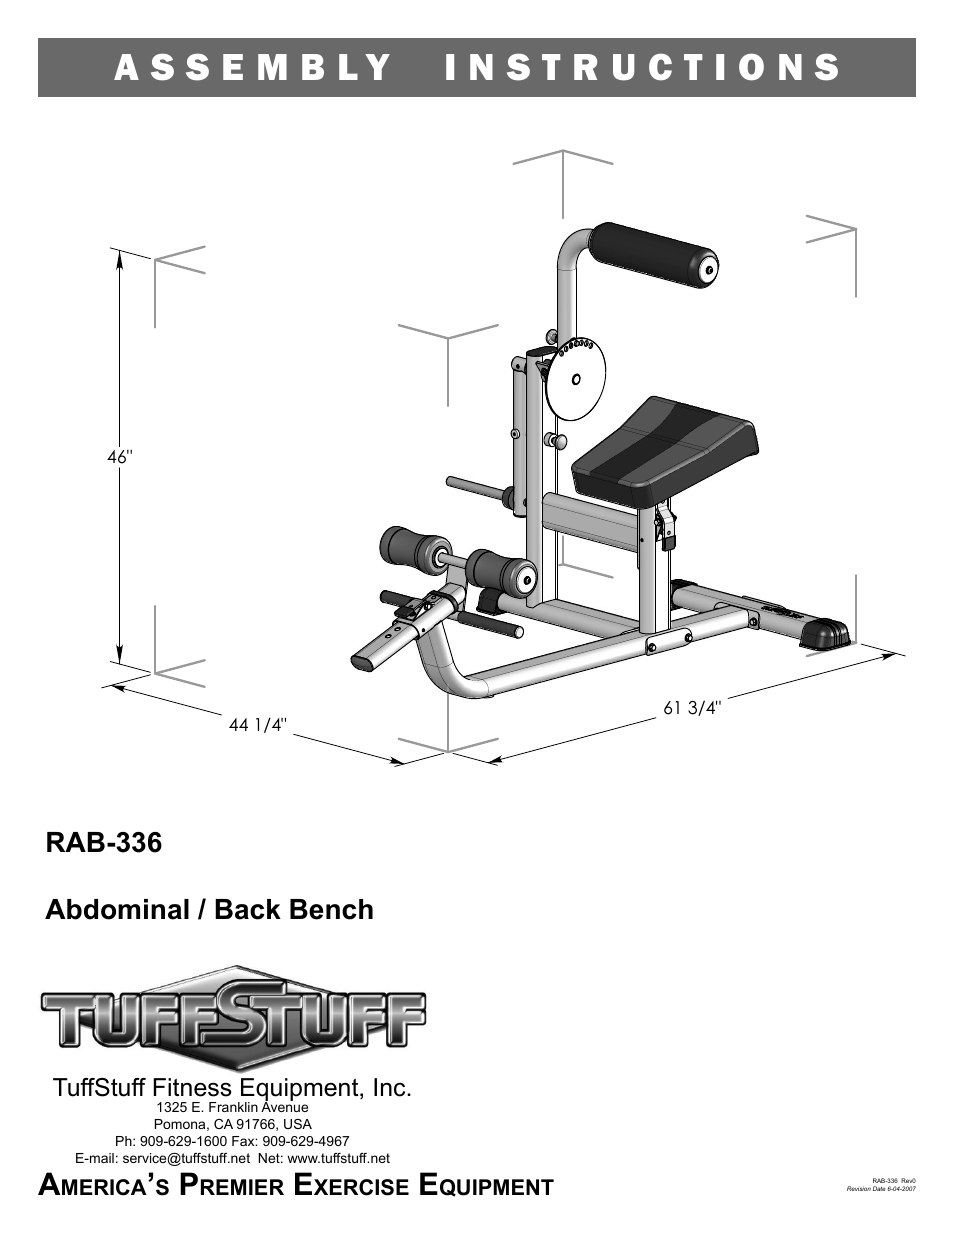 RAB-336 Abdominal/Back machine